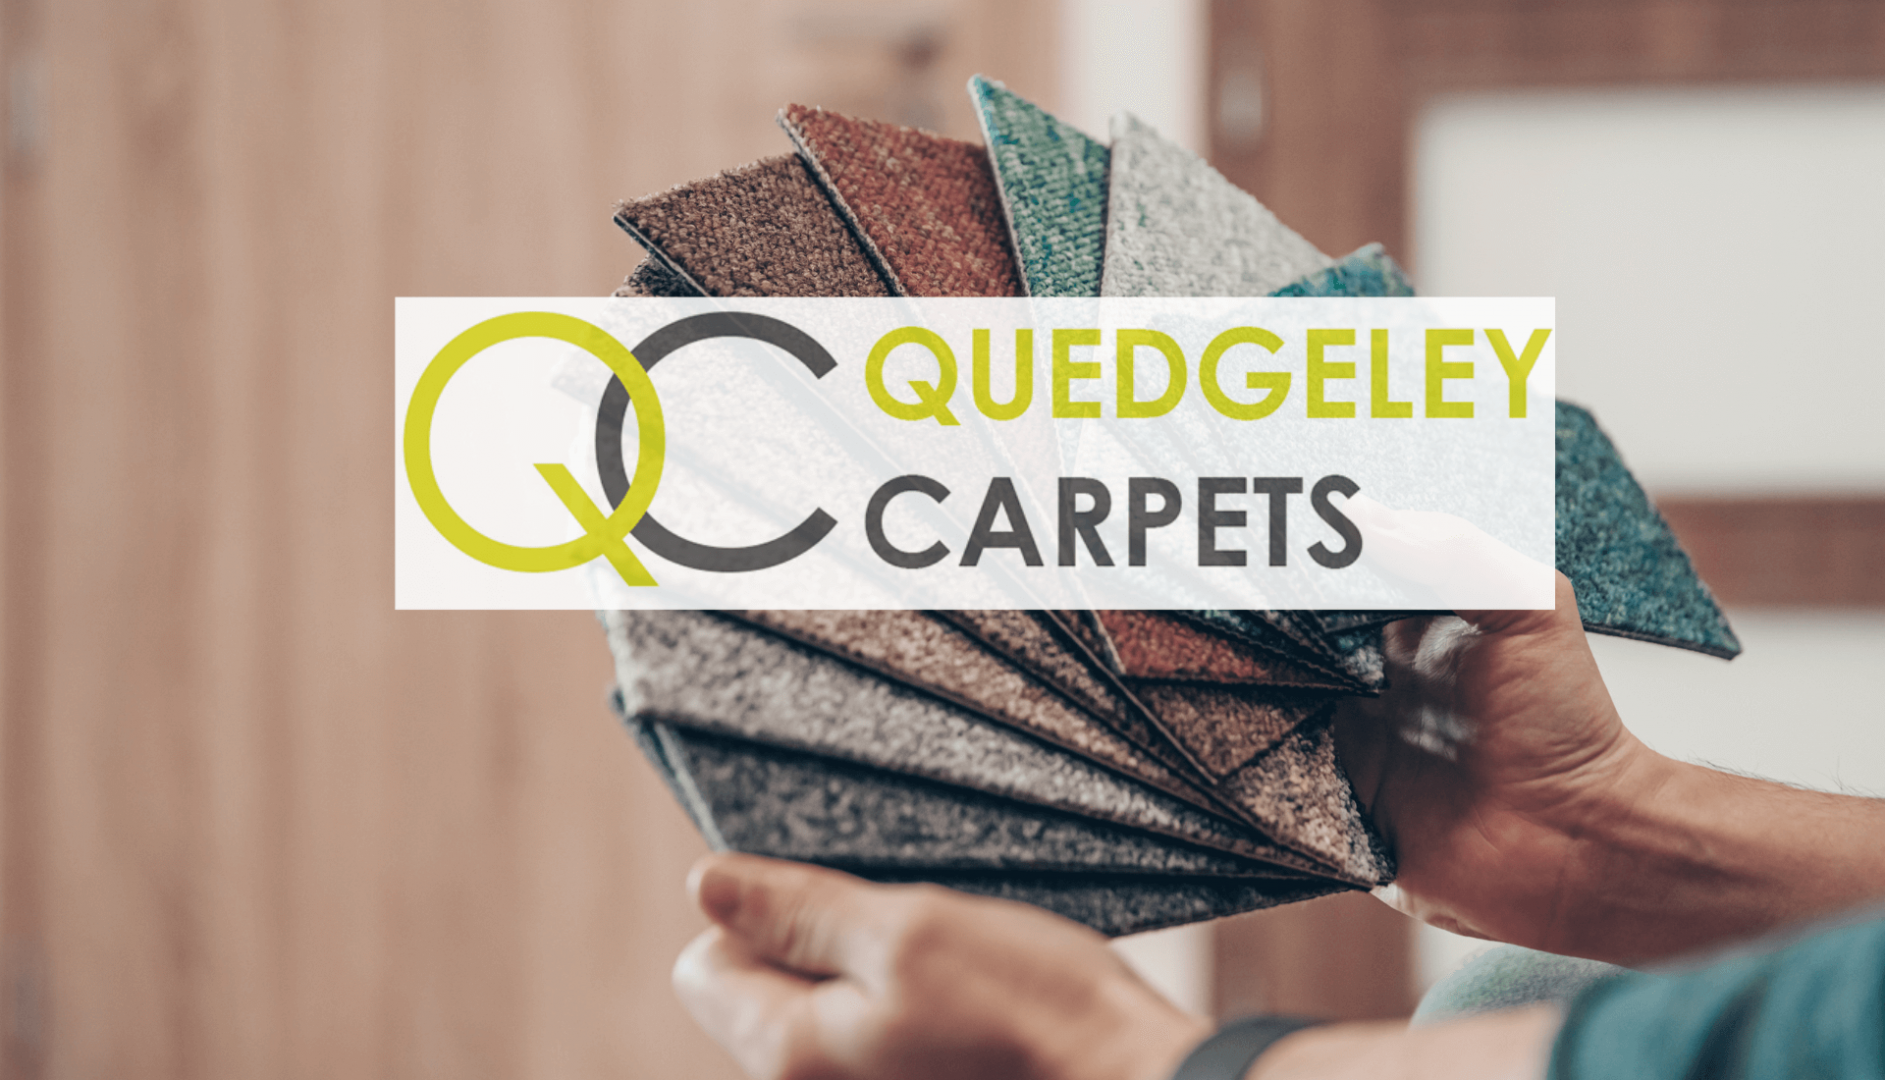 Quedgeley Carpets in Gloucester